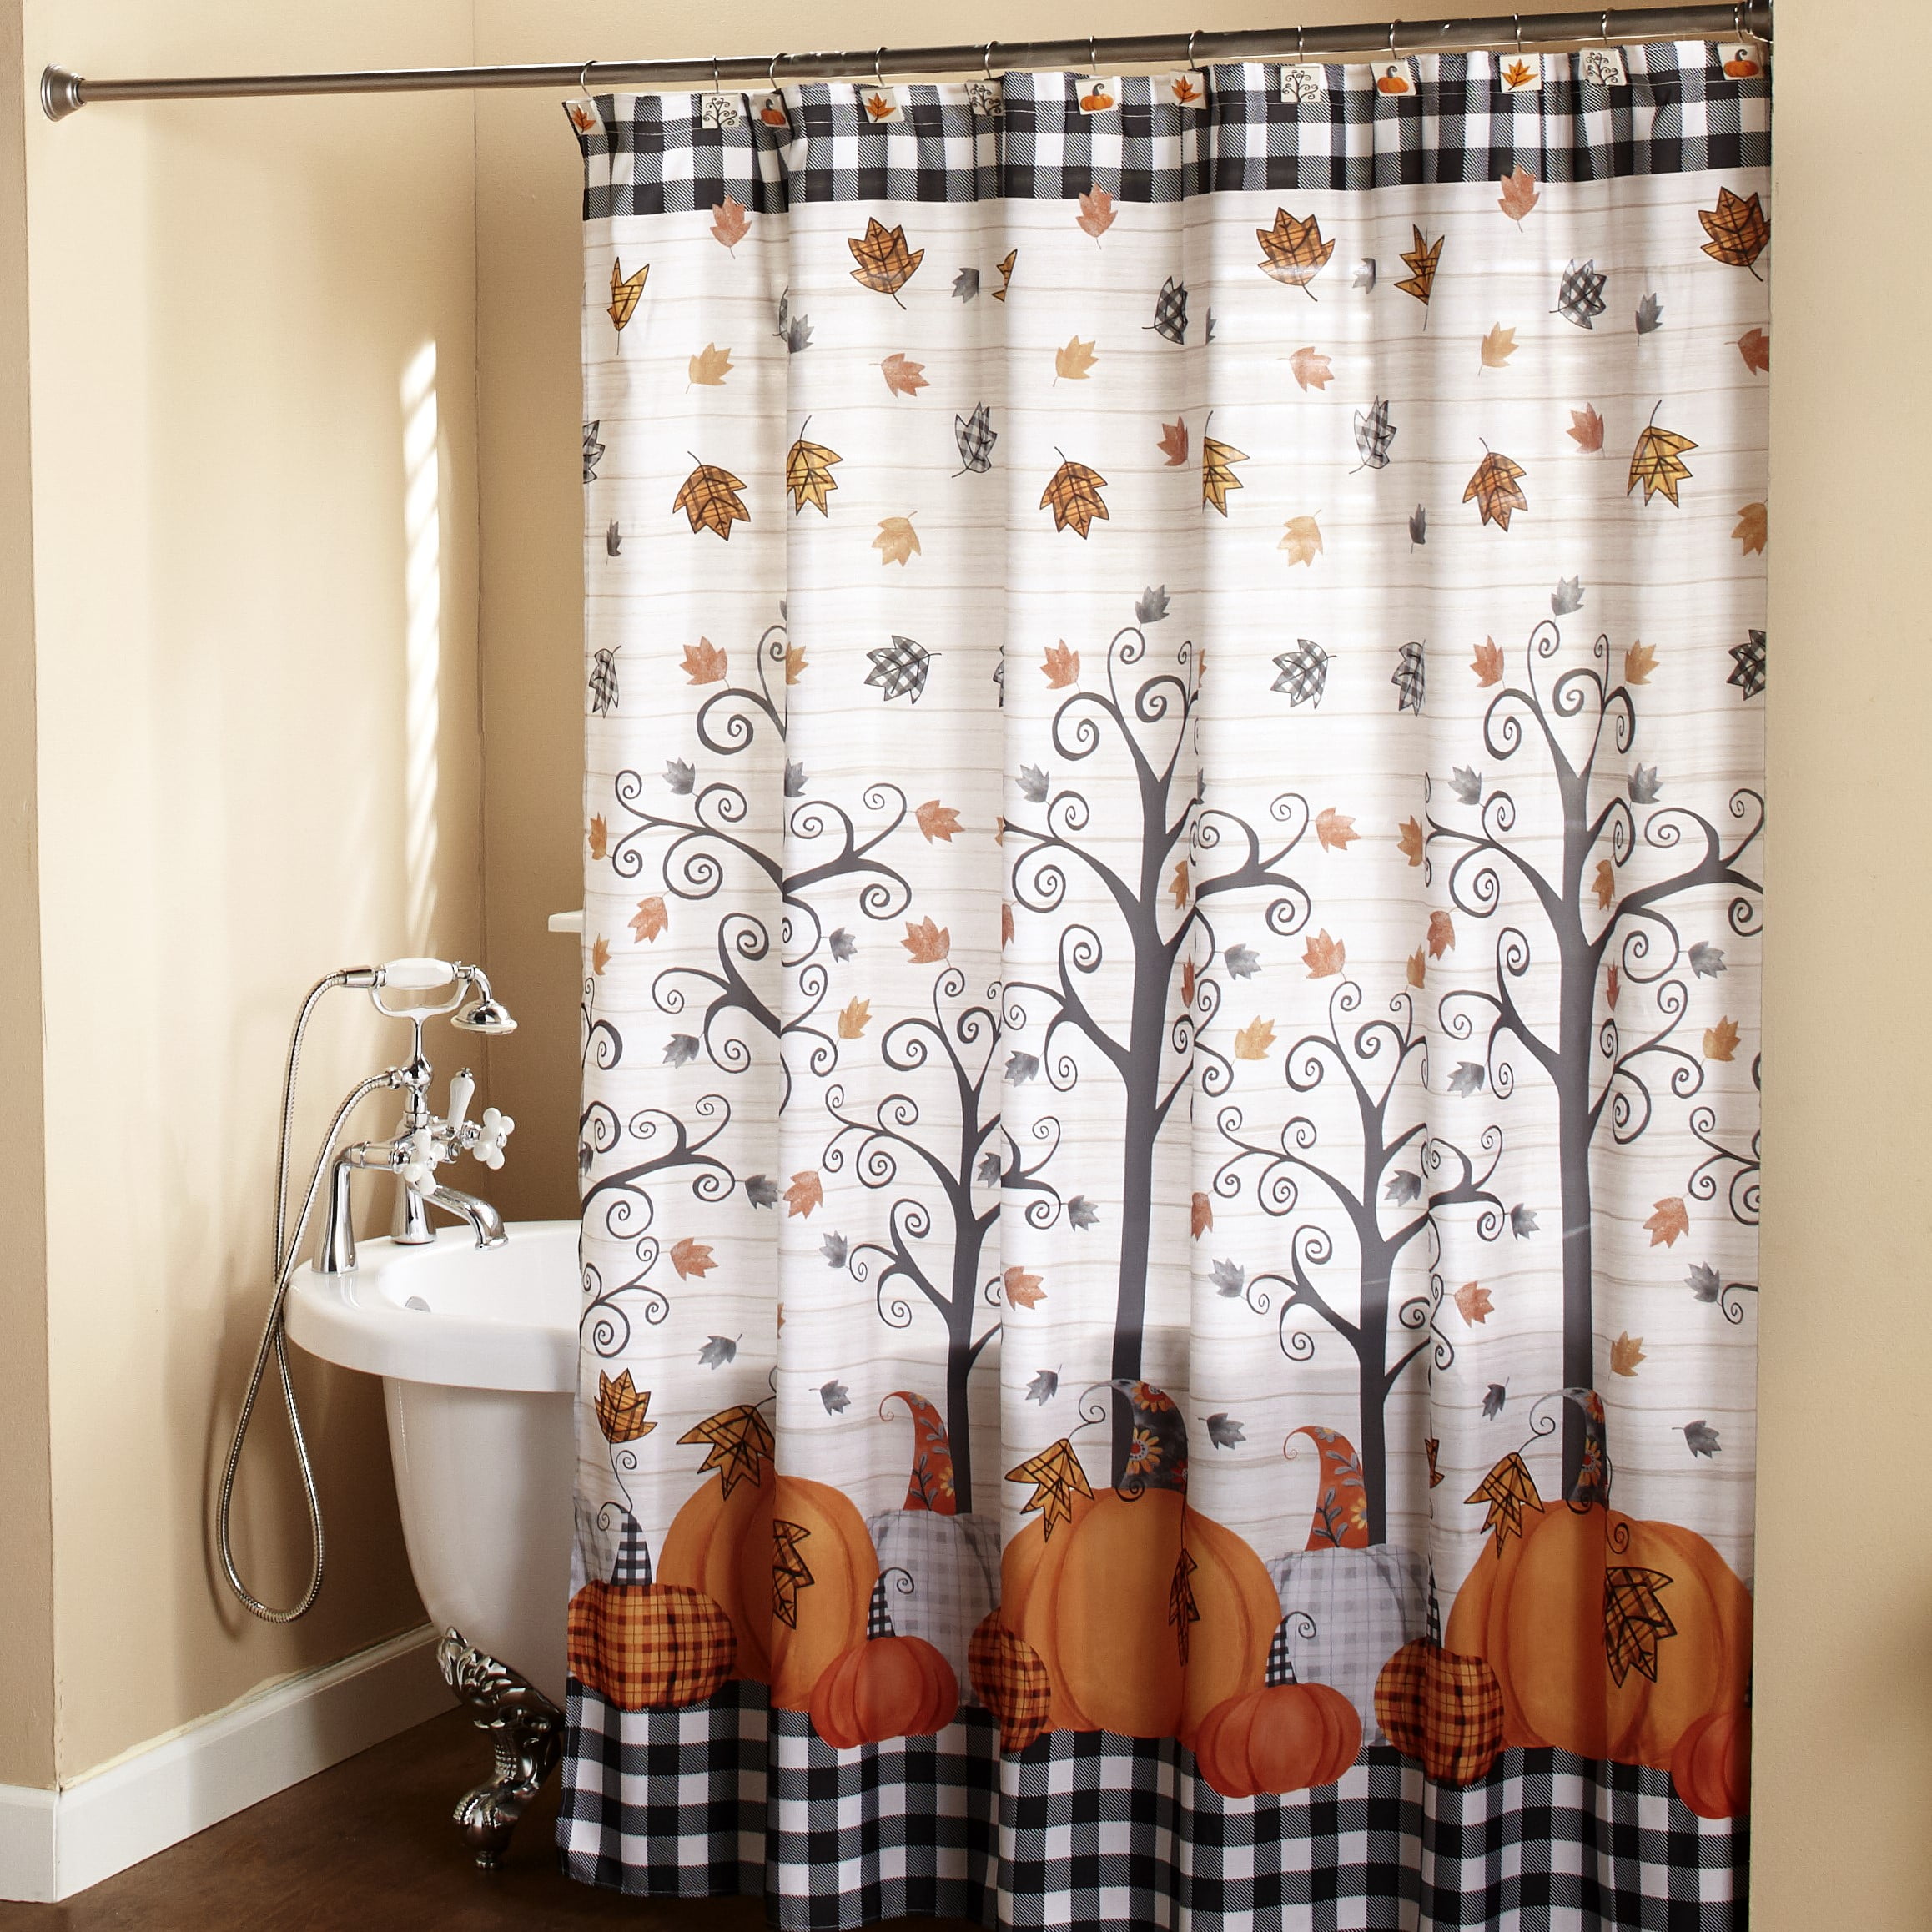 Details about   Autumn Truck and Pumpkins Shower Curtain Bathroom Decor Fabric & 12 Hooks 